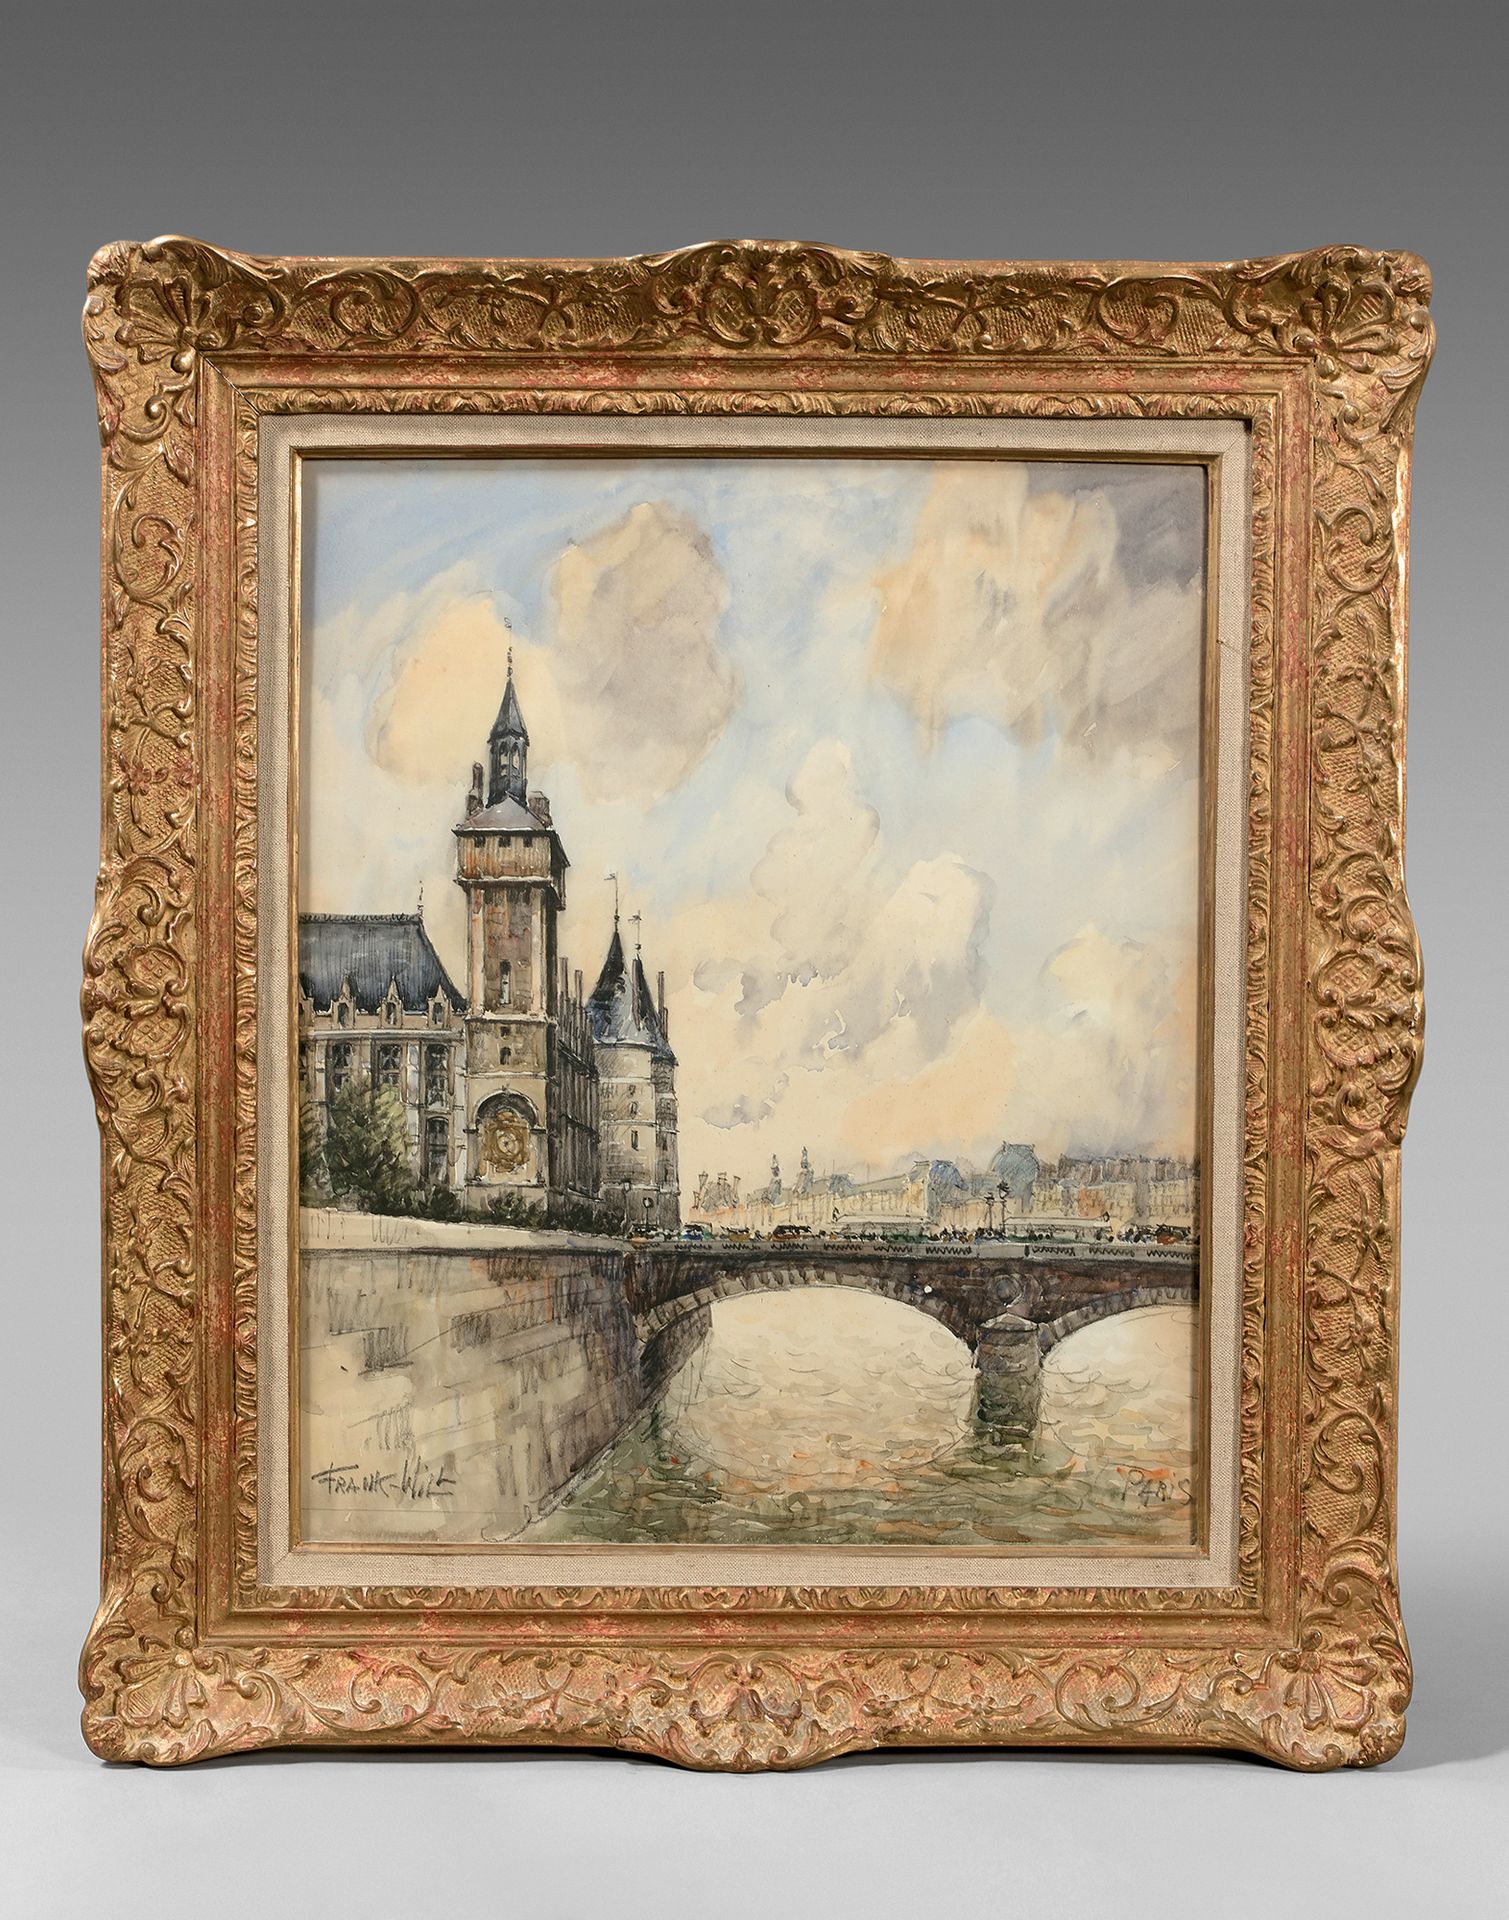 FRANK WILL (1900-1950) Quai de l'horloge, Paris
水彩画，左下方有签名，位于右下方。
54 x 44 cm